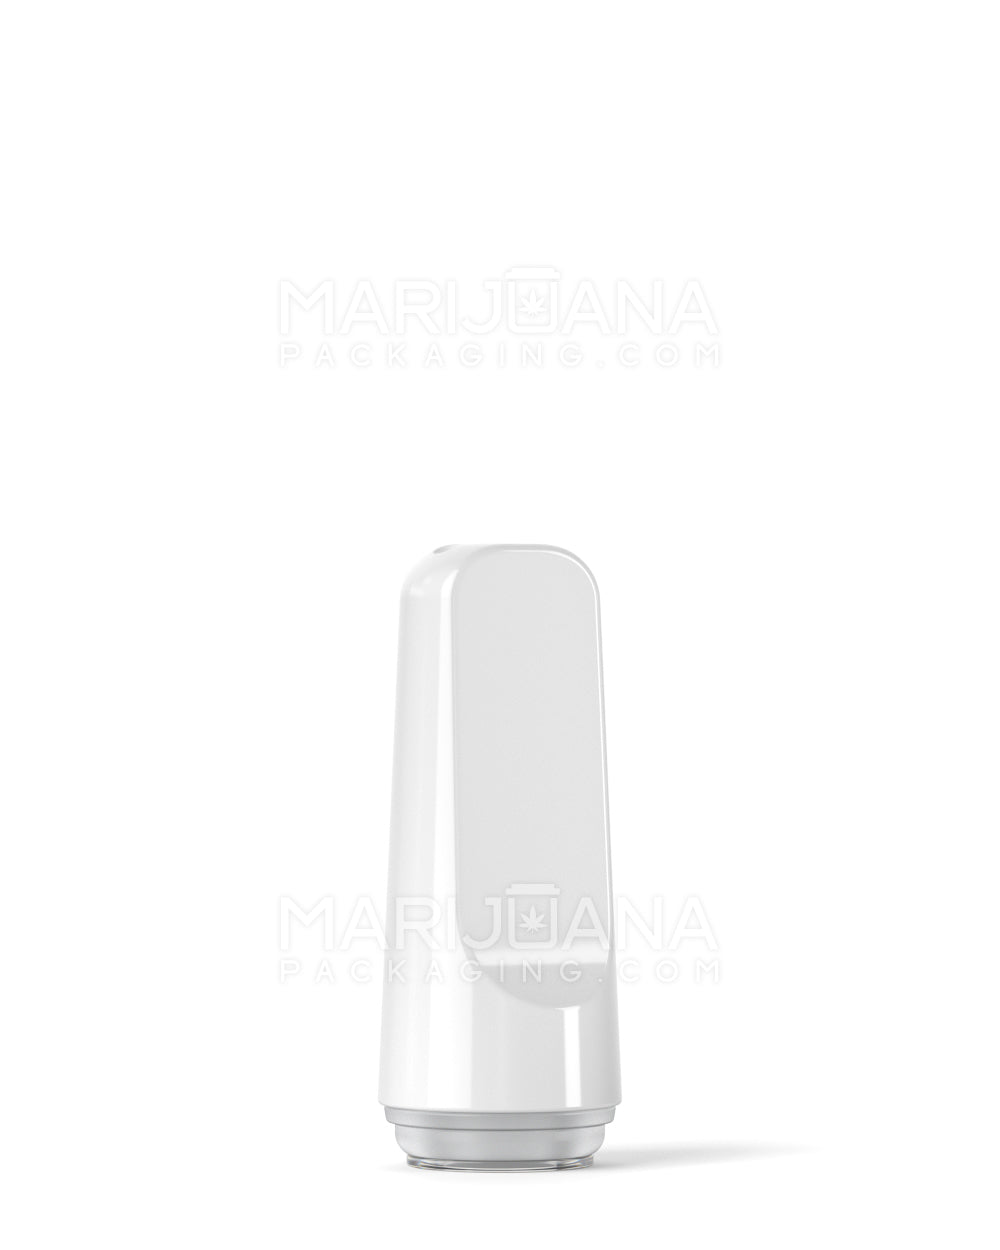 RAE | Flat Vape Mouthpiece for Hand Press Plastic Cartridges | White Plastic - Hand Press - 400 Count - 2